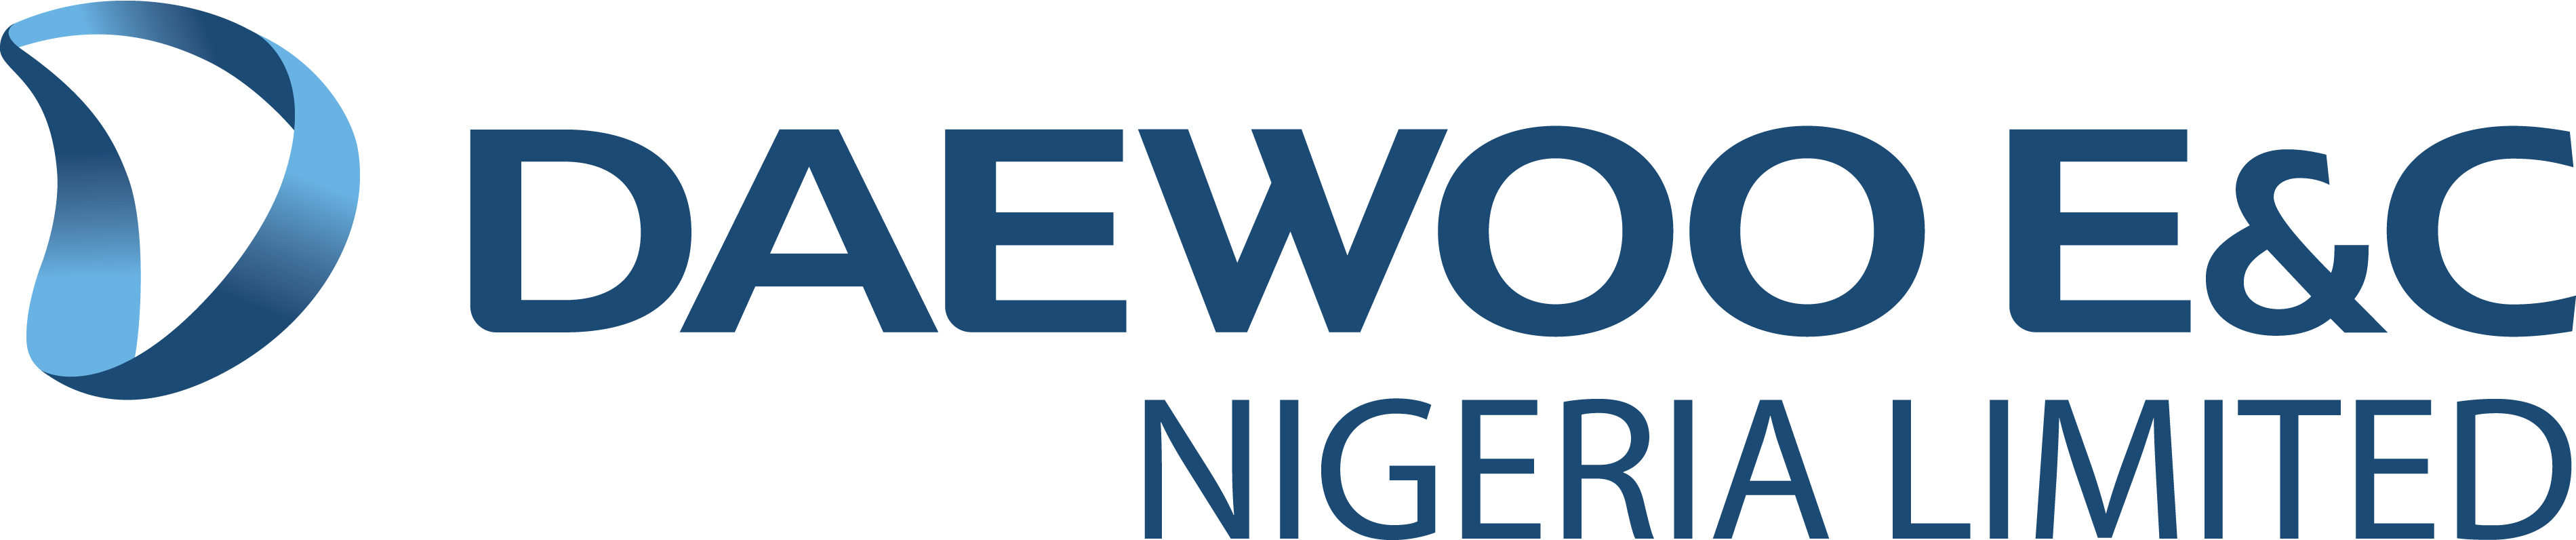 DAEWOO E&C NIGERIA LIMITED Logo Png